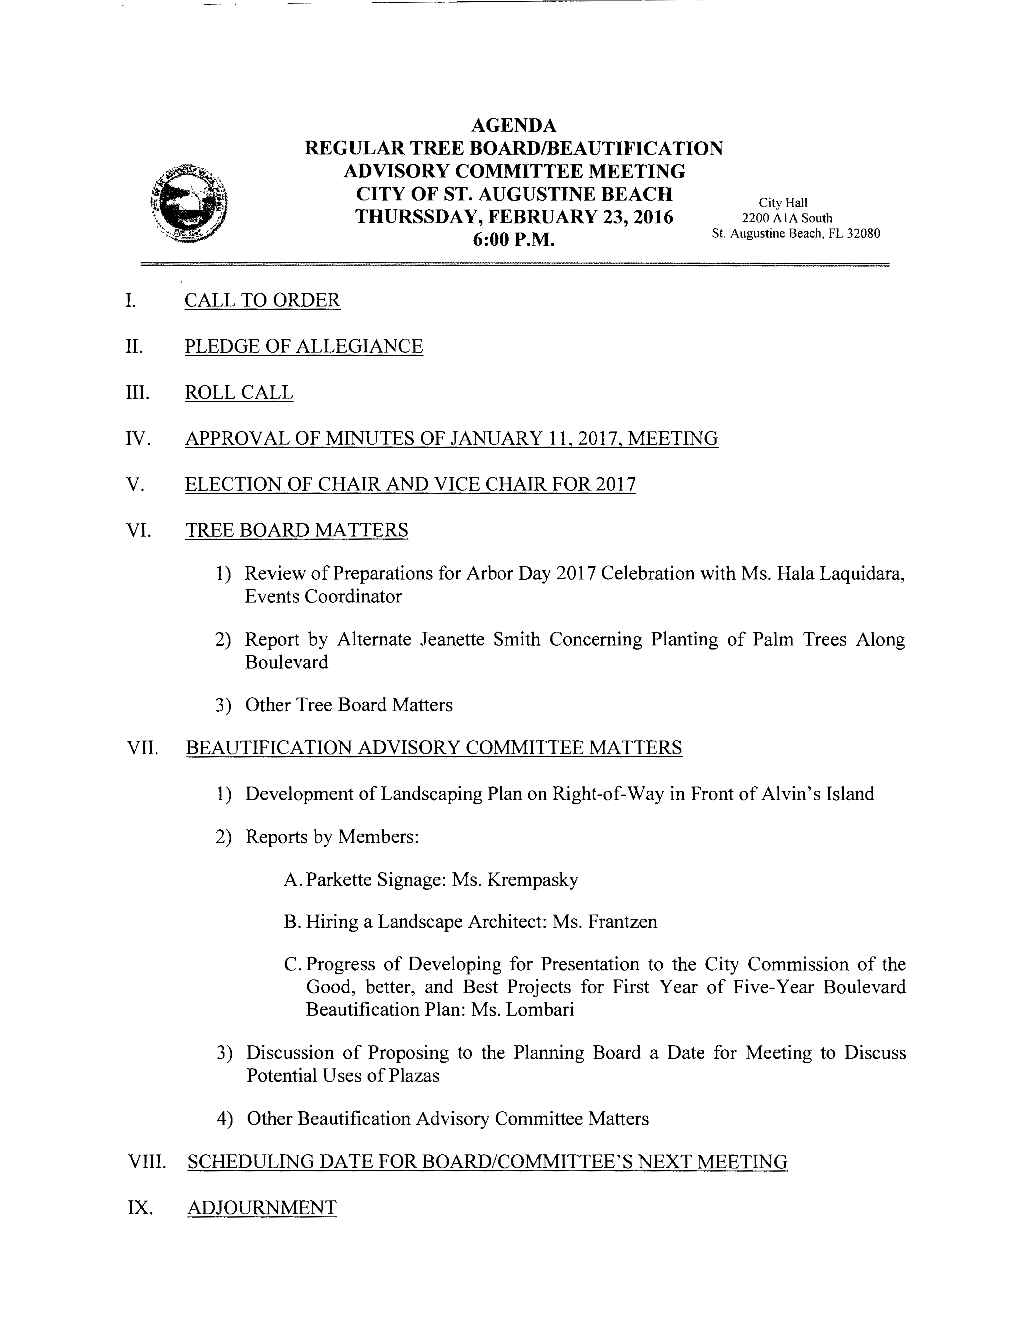 Agenda Regular Tree Board/Beautification Advisory Committee Meeting